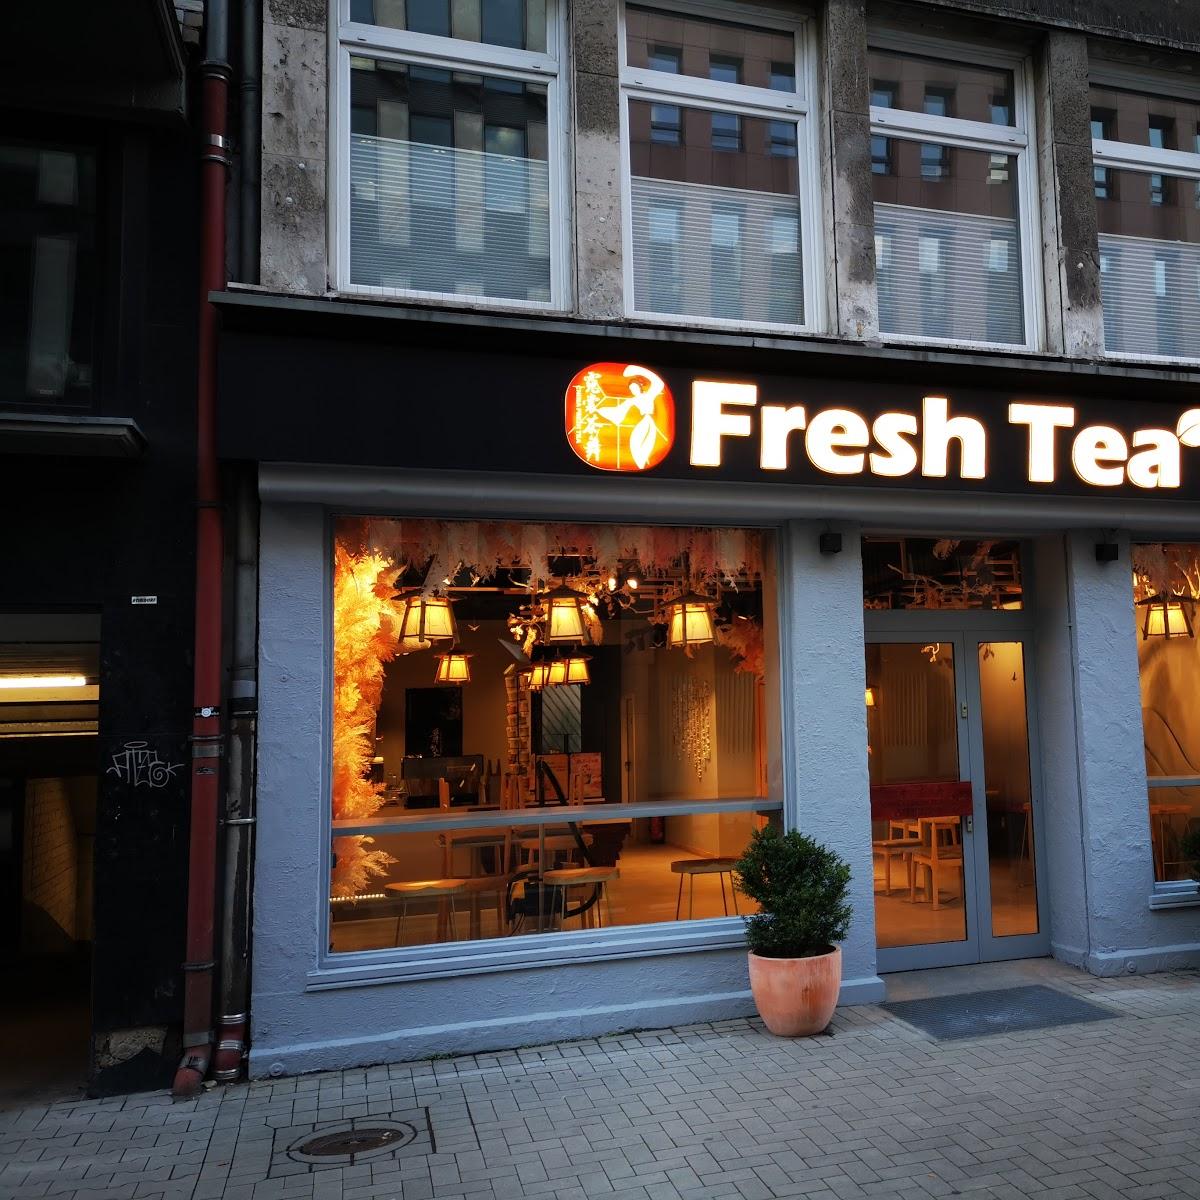 Restaurant "China Fresh Tea" in Düsseldorf